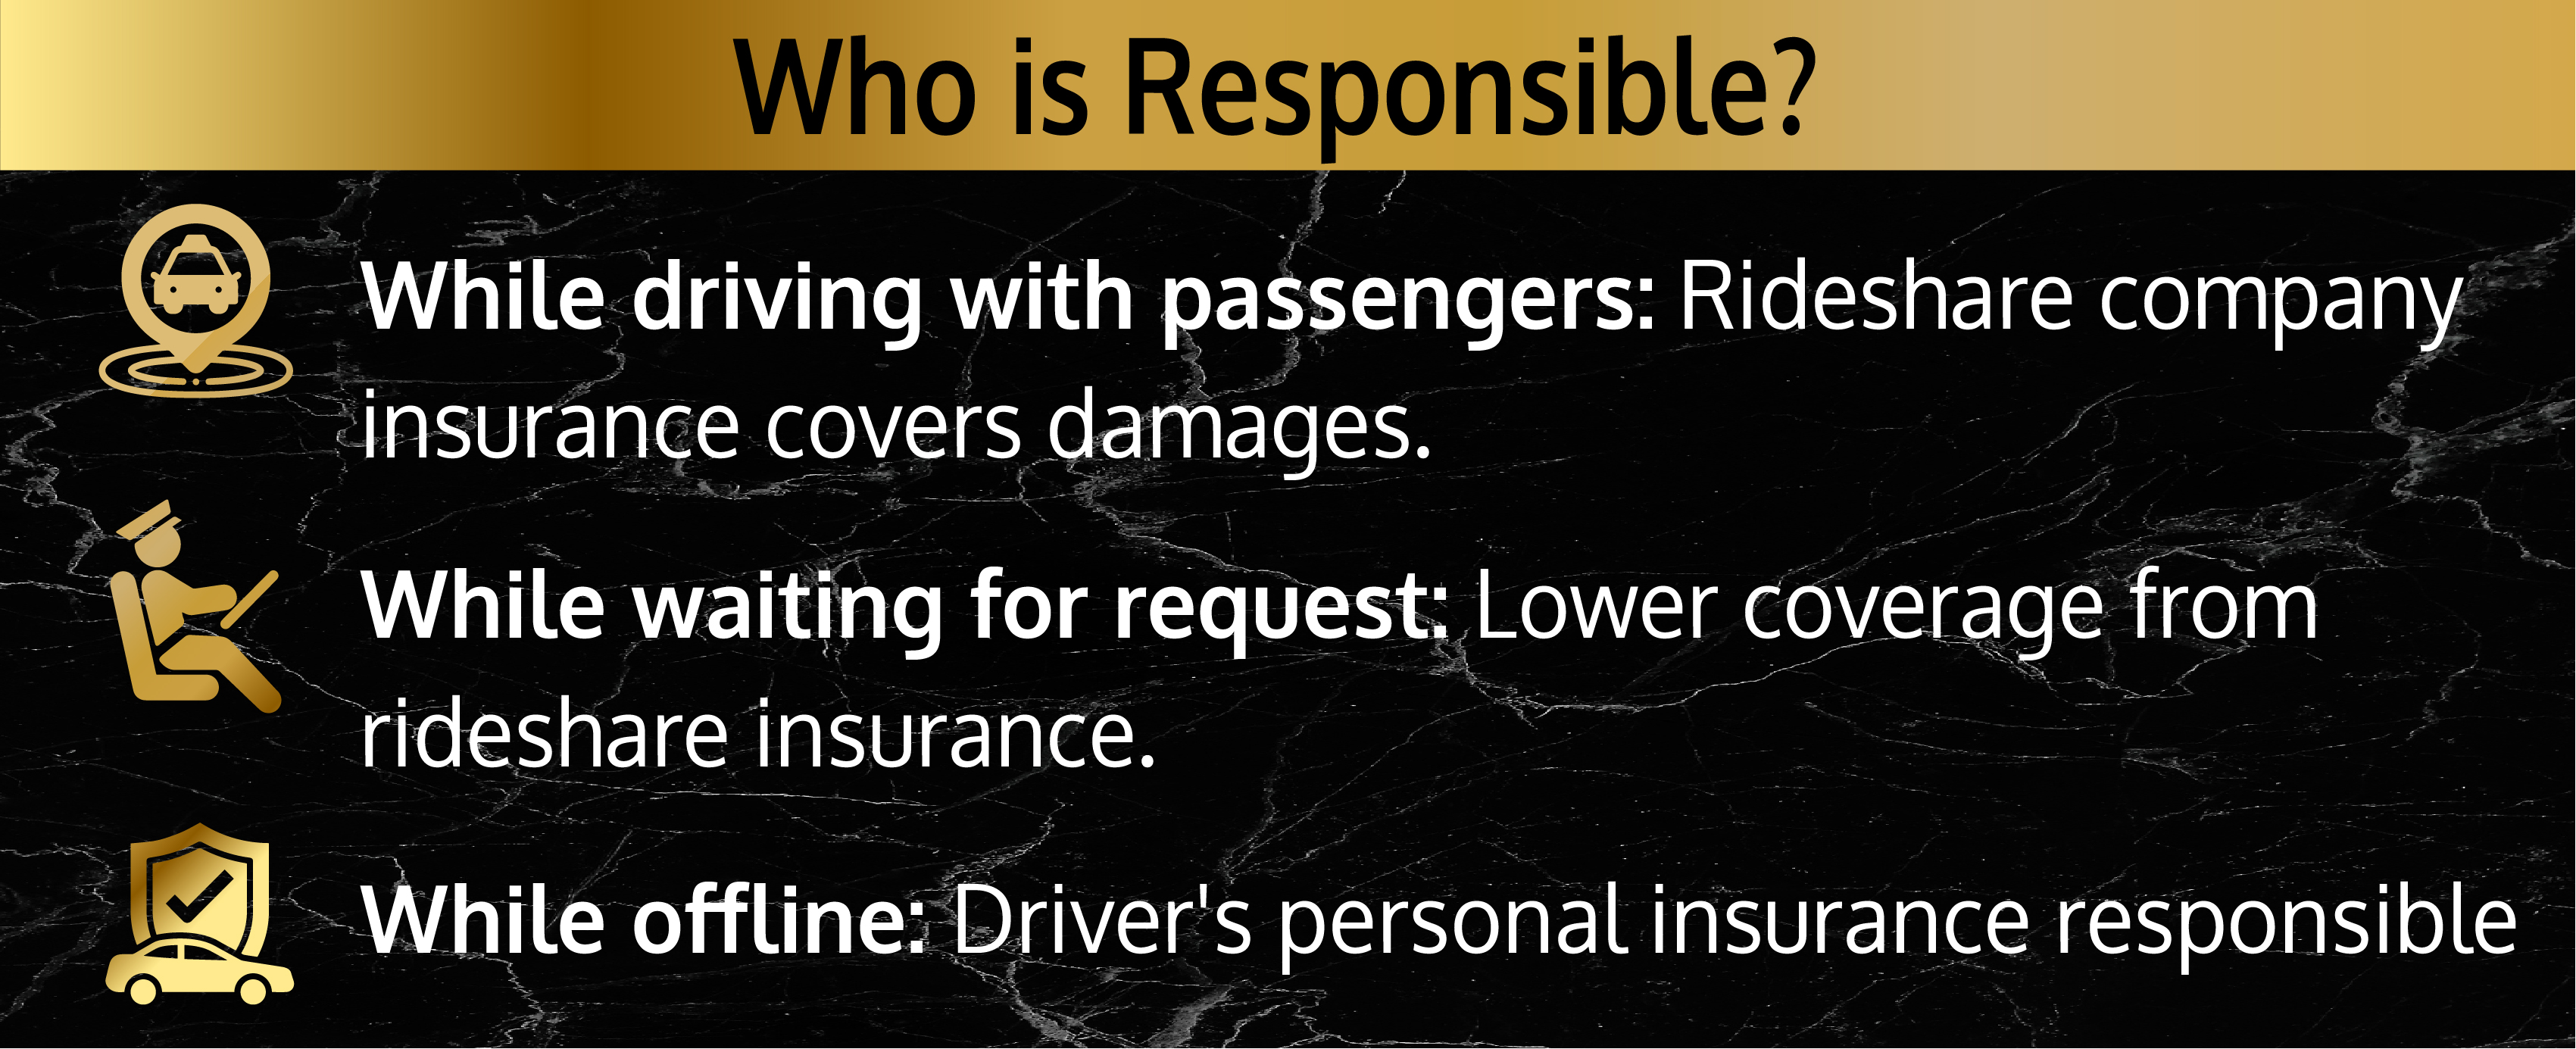 rideshare accident responsibility